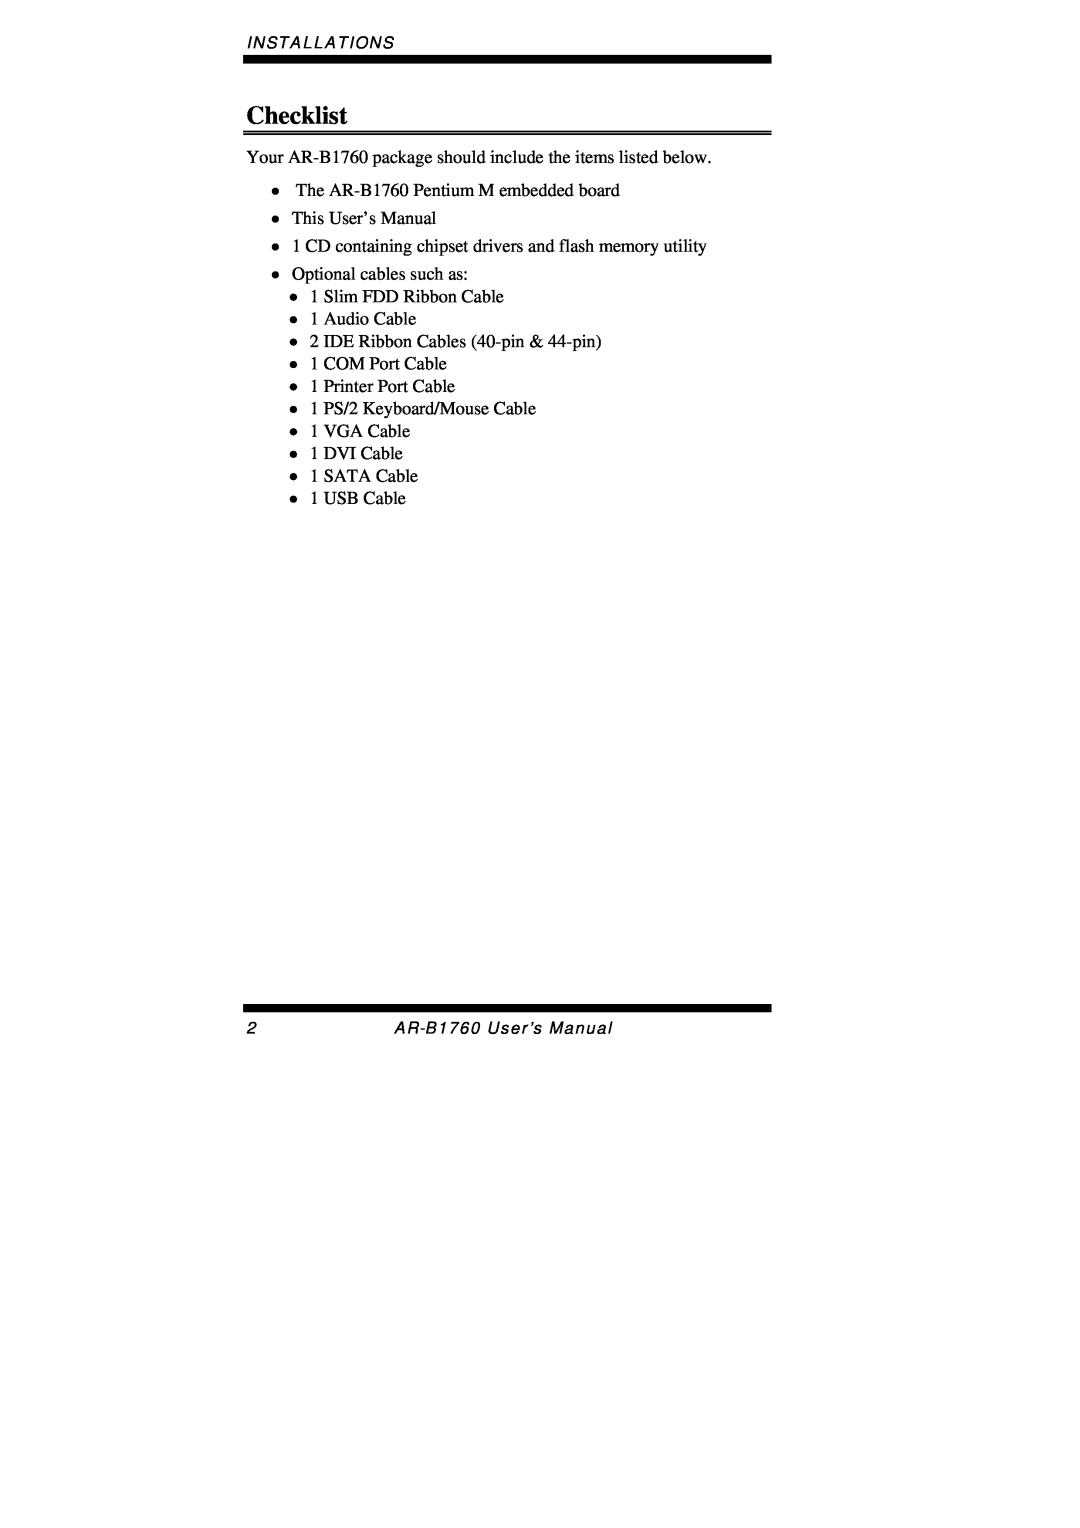 Intel AR-B1760 user manual Checklist 